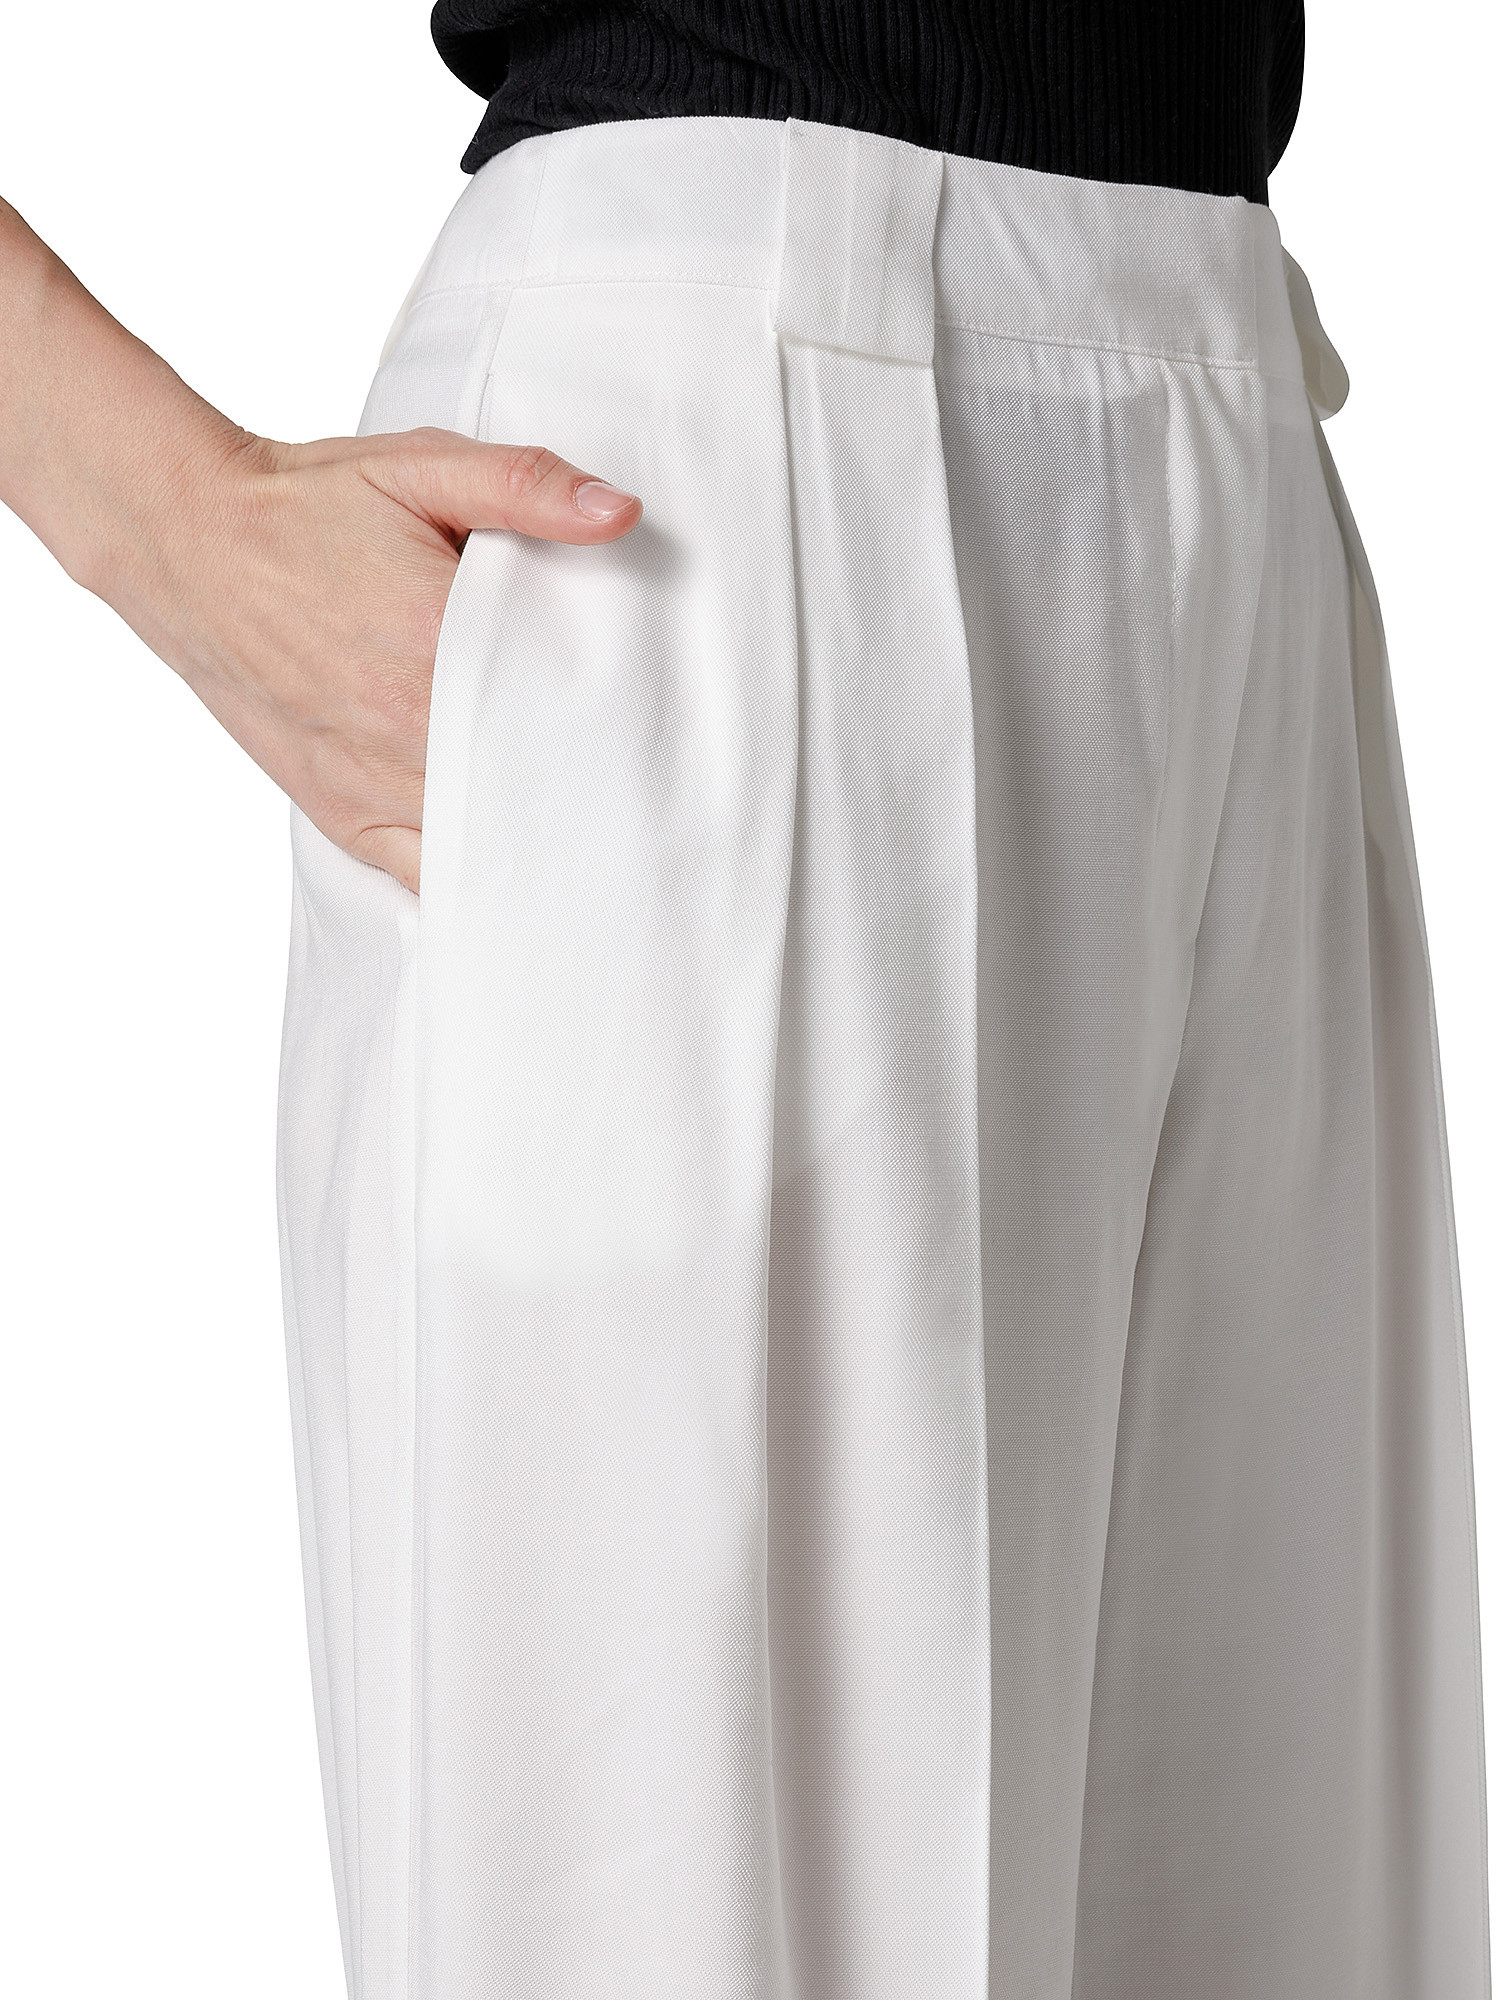 Pantalone, Bianco, large image number 4